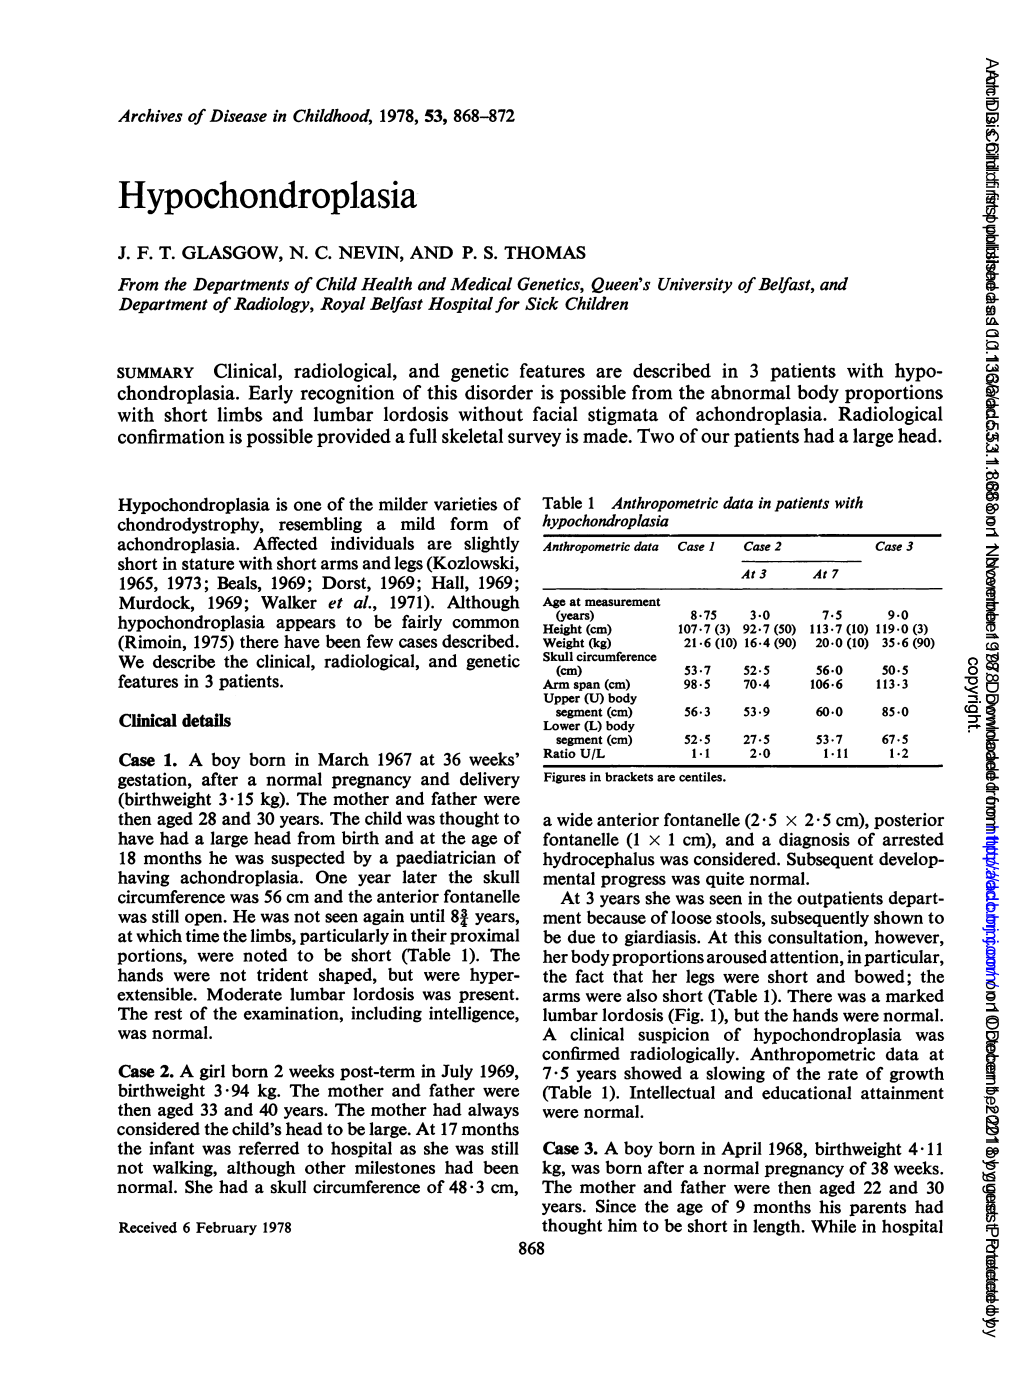 Hypochondroplasia